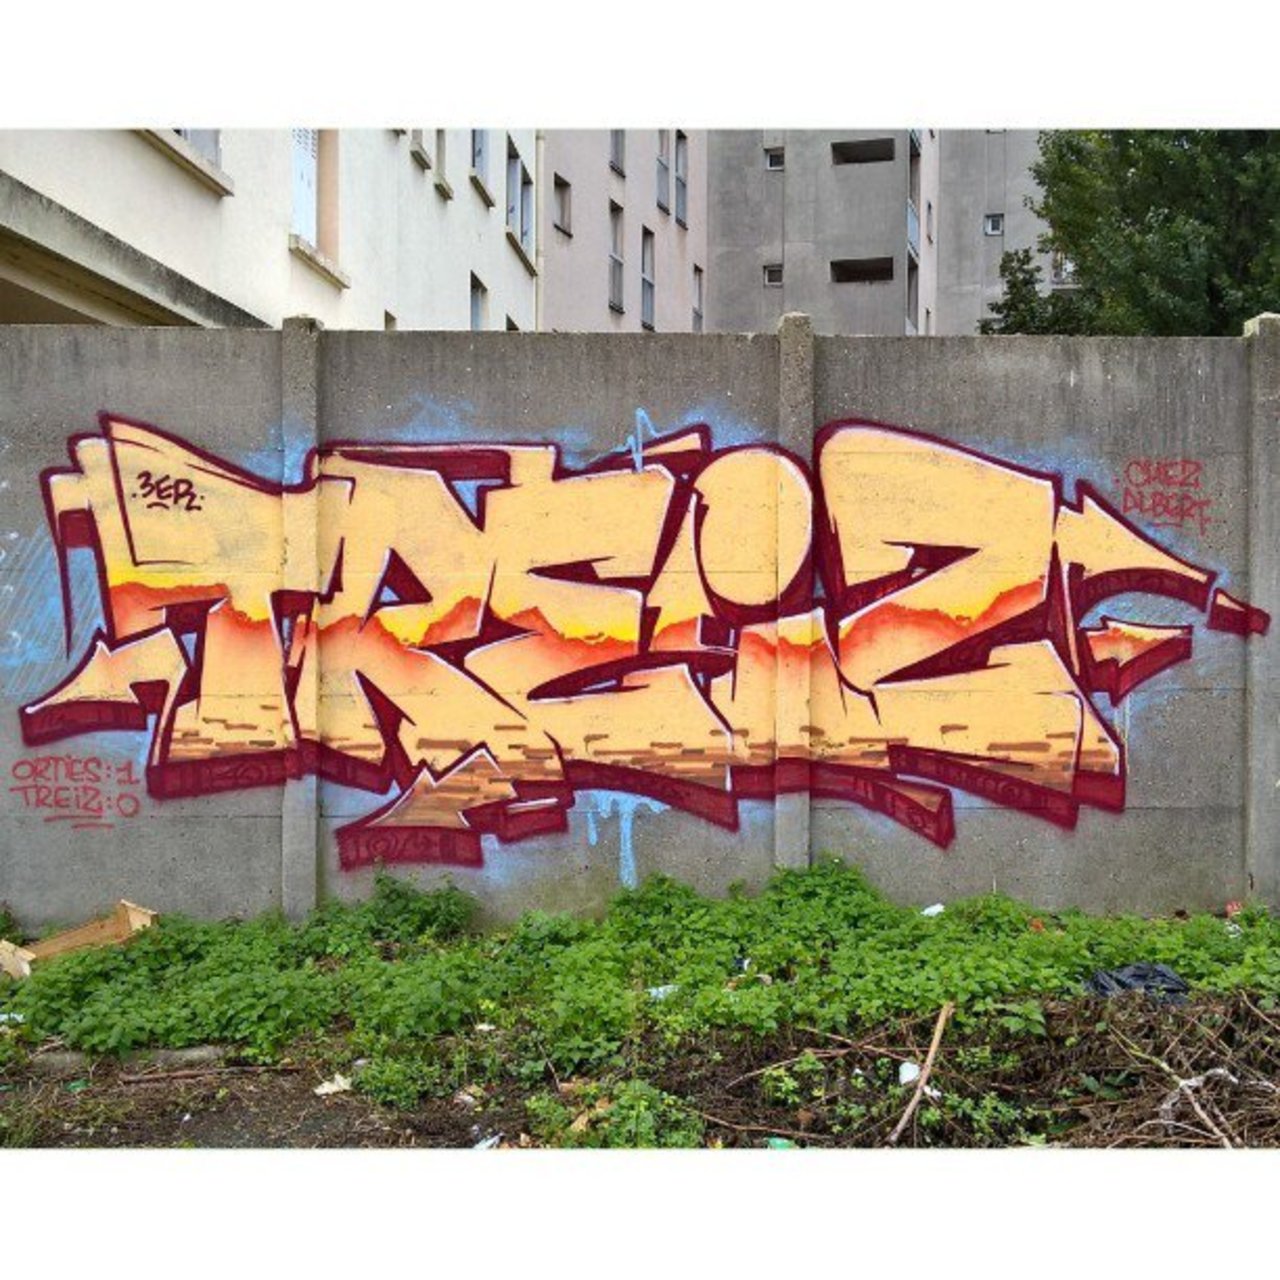 TREIZ
#3ER #streetart #graffiti #graff #art #fatcap #bombing #sprayart #spraycanart #wallart #handstyle #lettering … https://t.co/2fCX7qG1zm